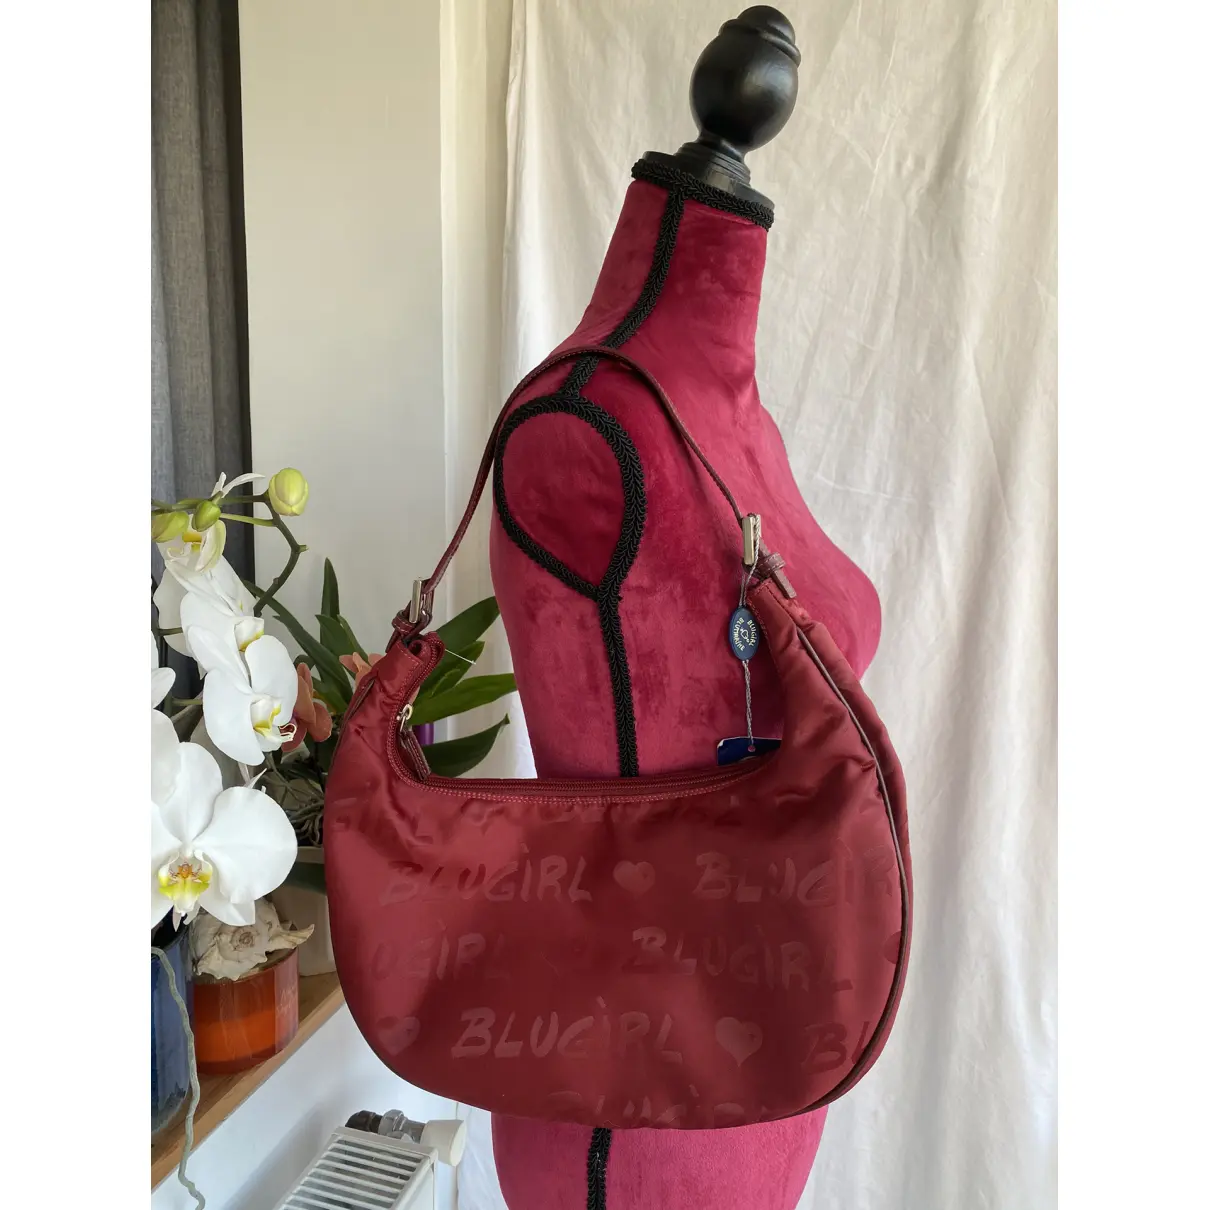 Buy Blumarine Cloth handbag online